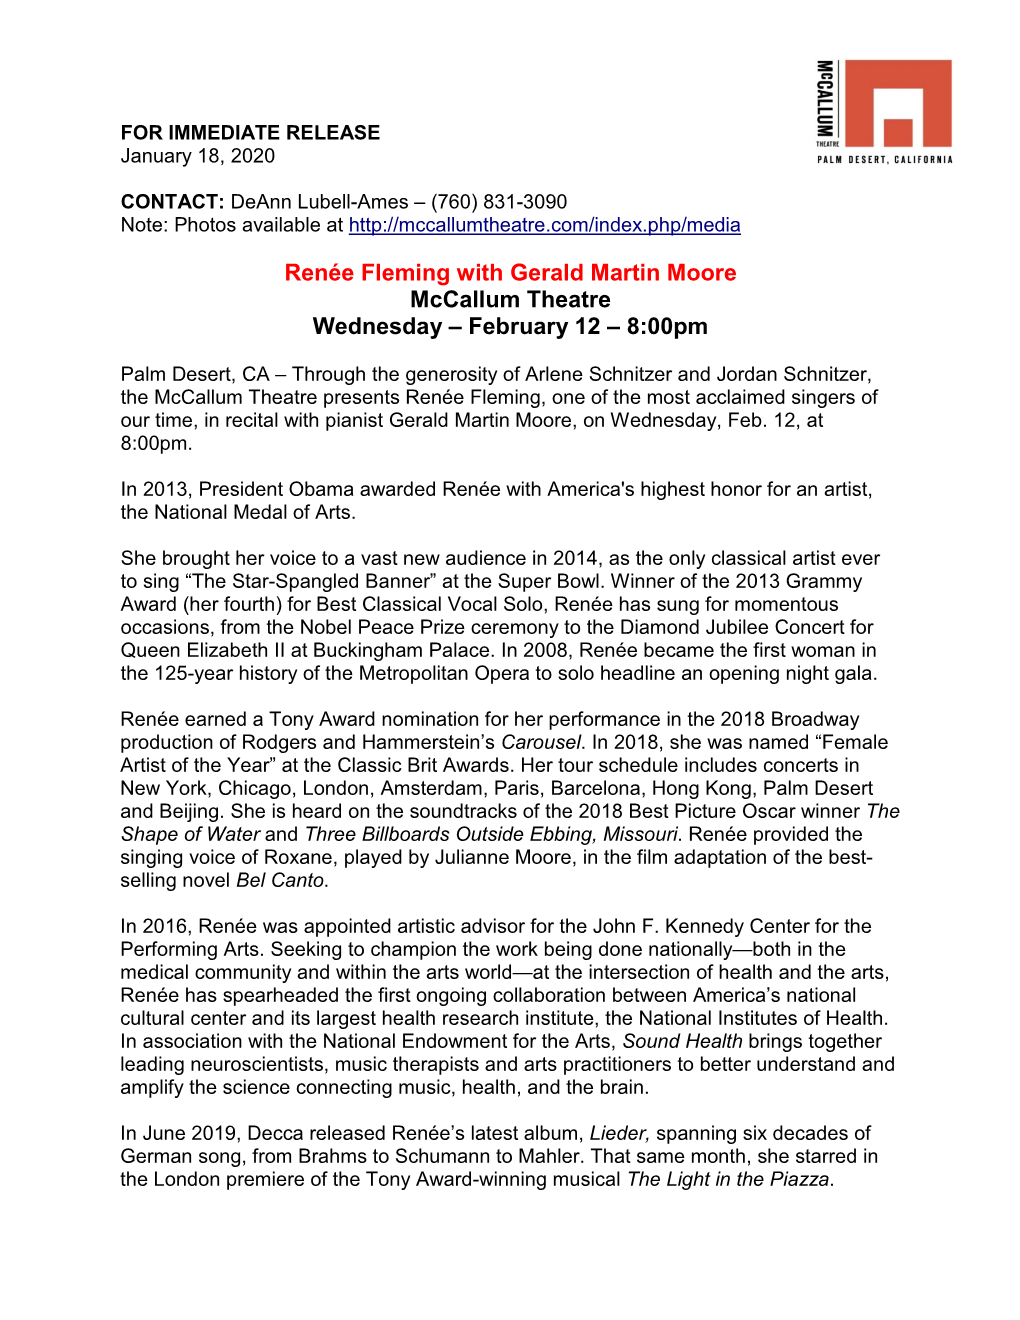 Renée Fleming with Gerald Martin Moore Mccallum Theatre Wednesday – February 12 – 8:00Pm